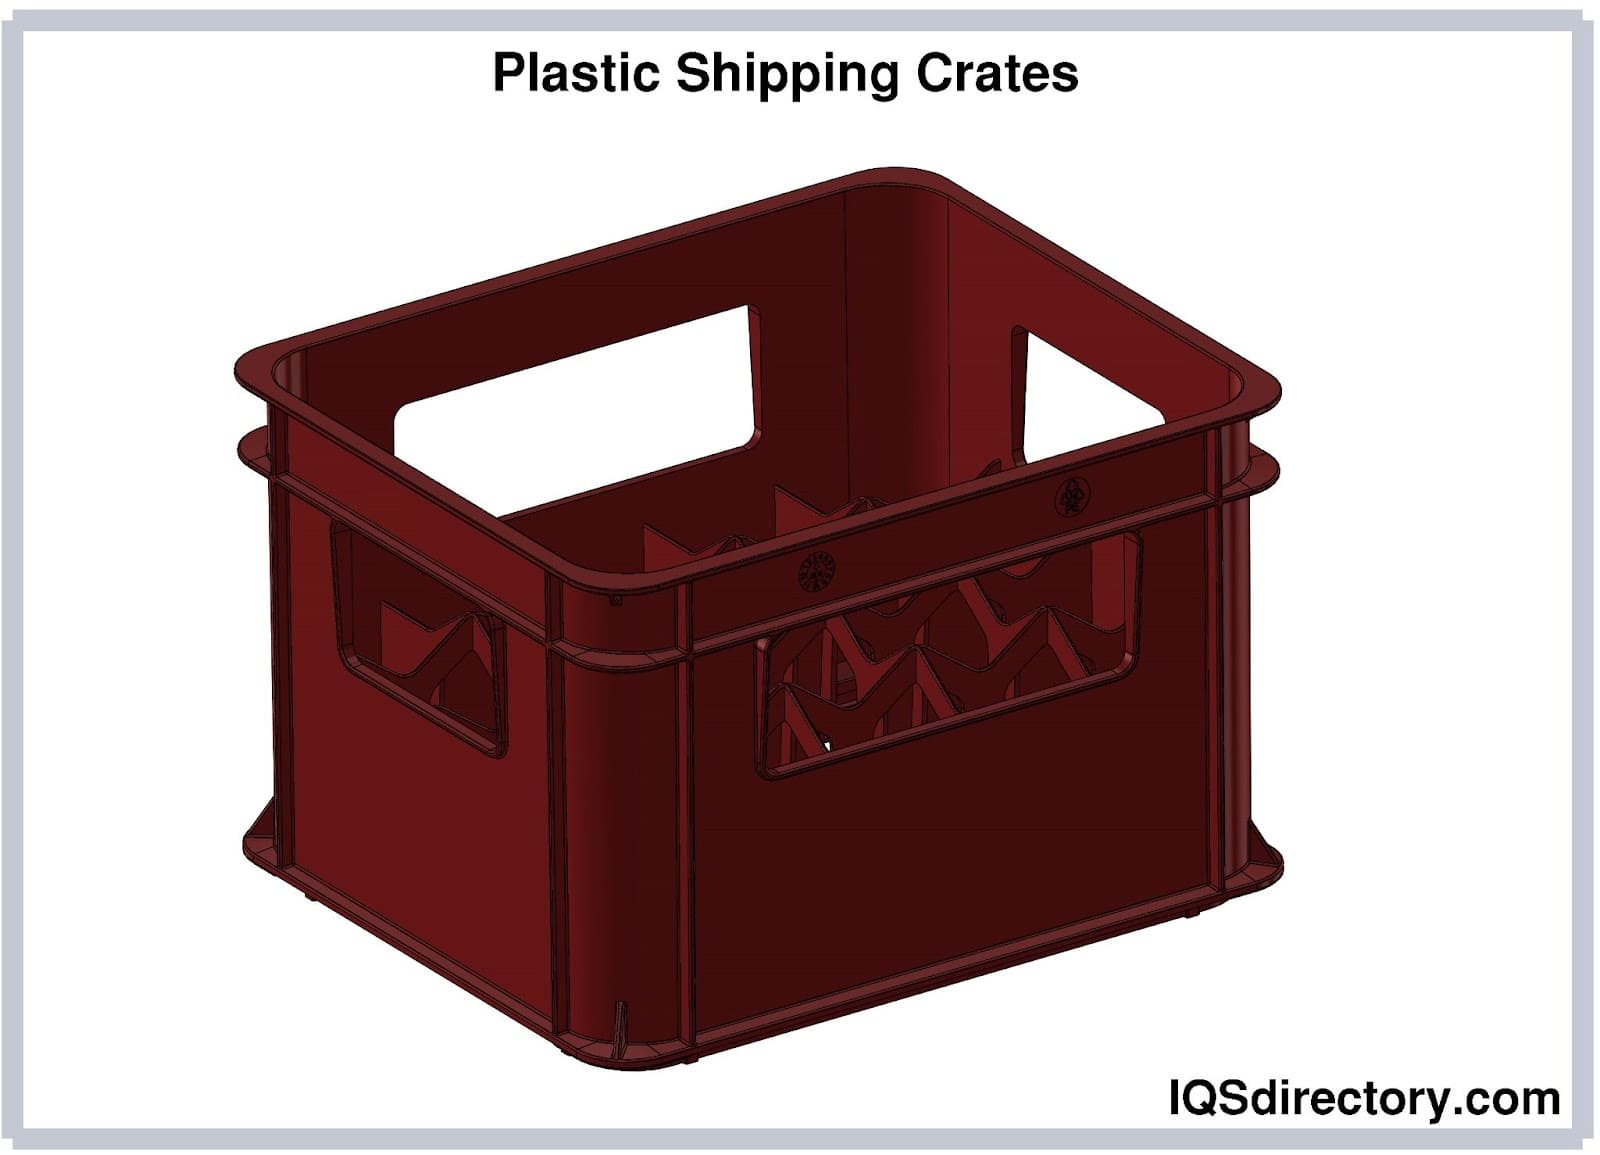 Plastic Shipping Crates